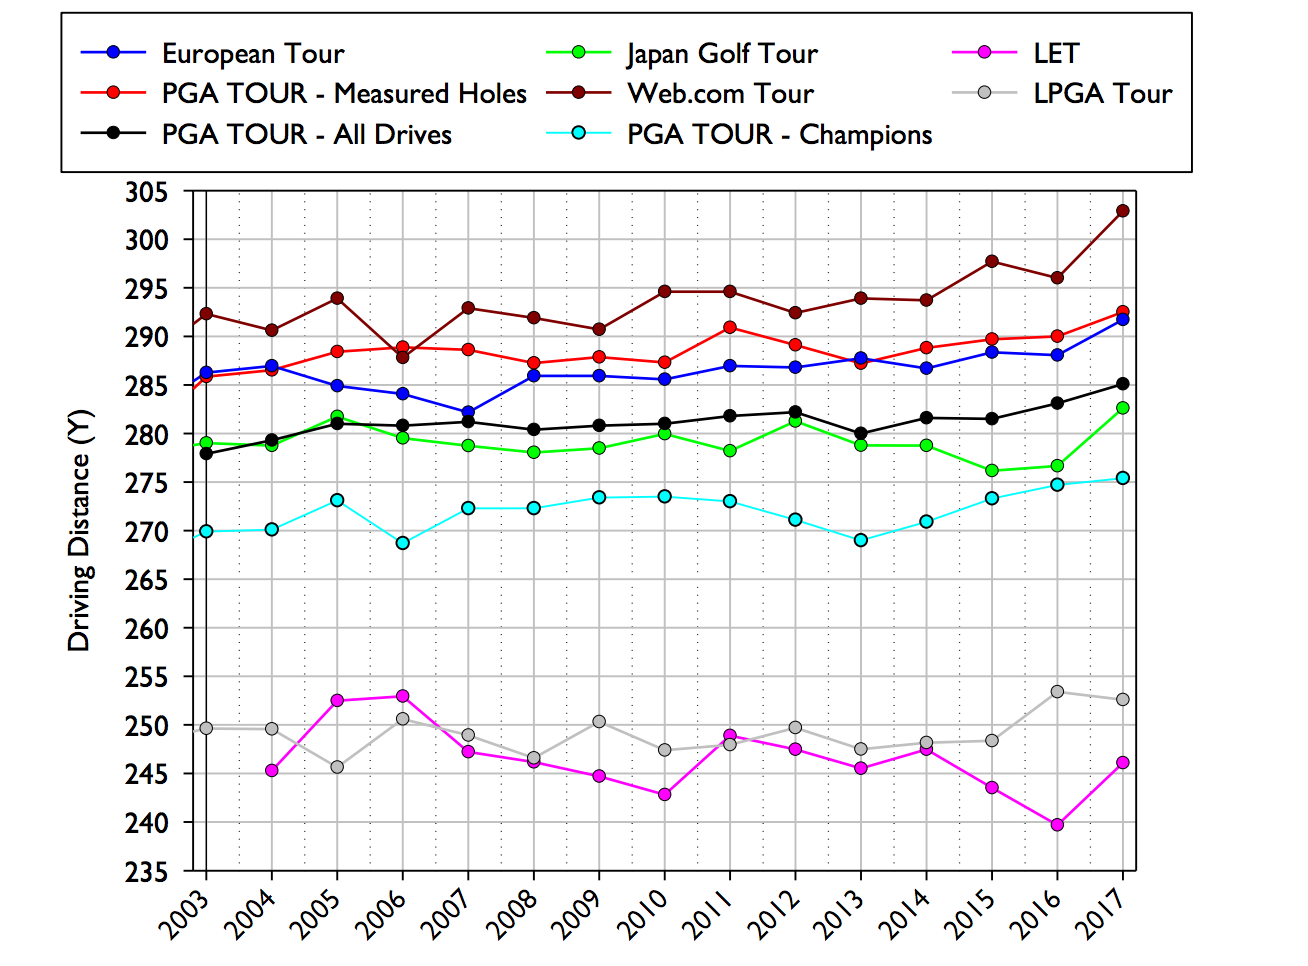 PGA Tour average. Since 2003. Report released